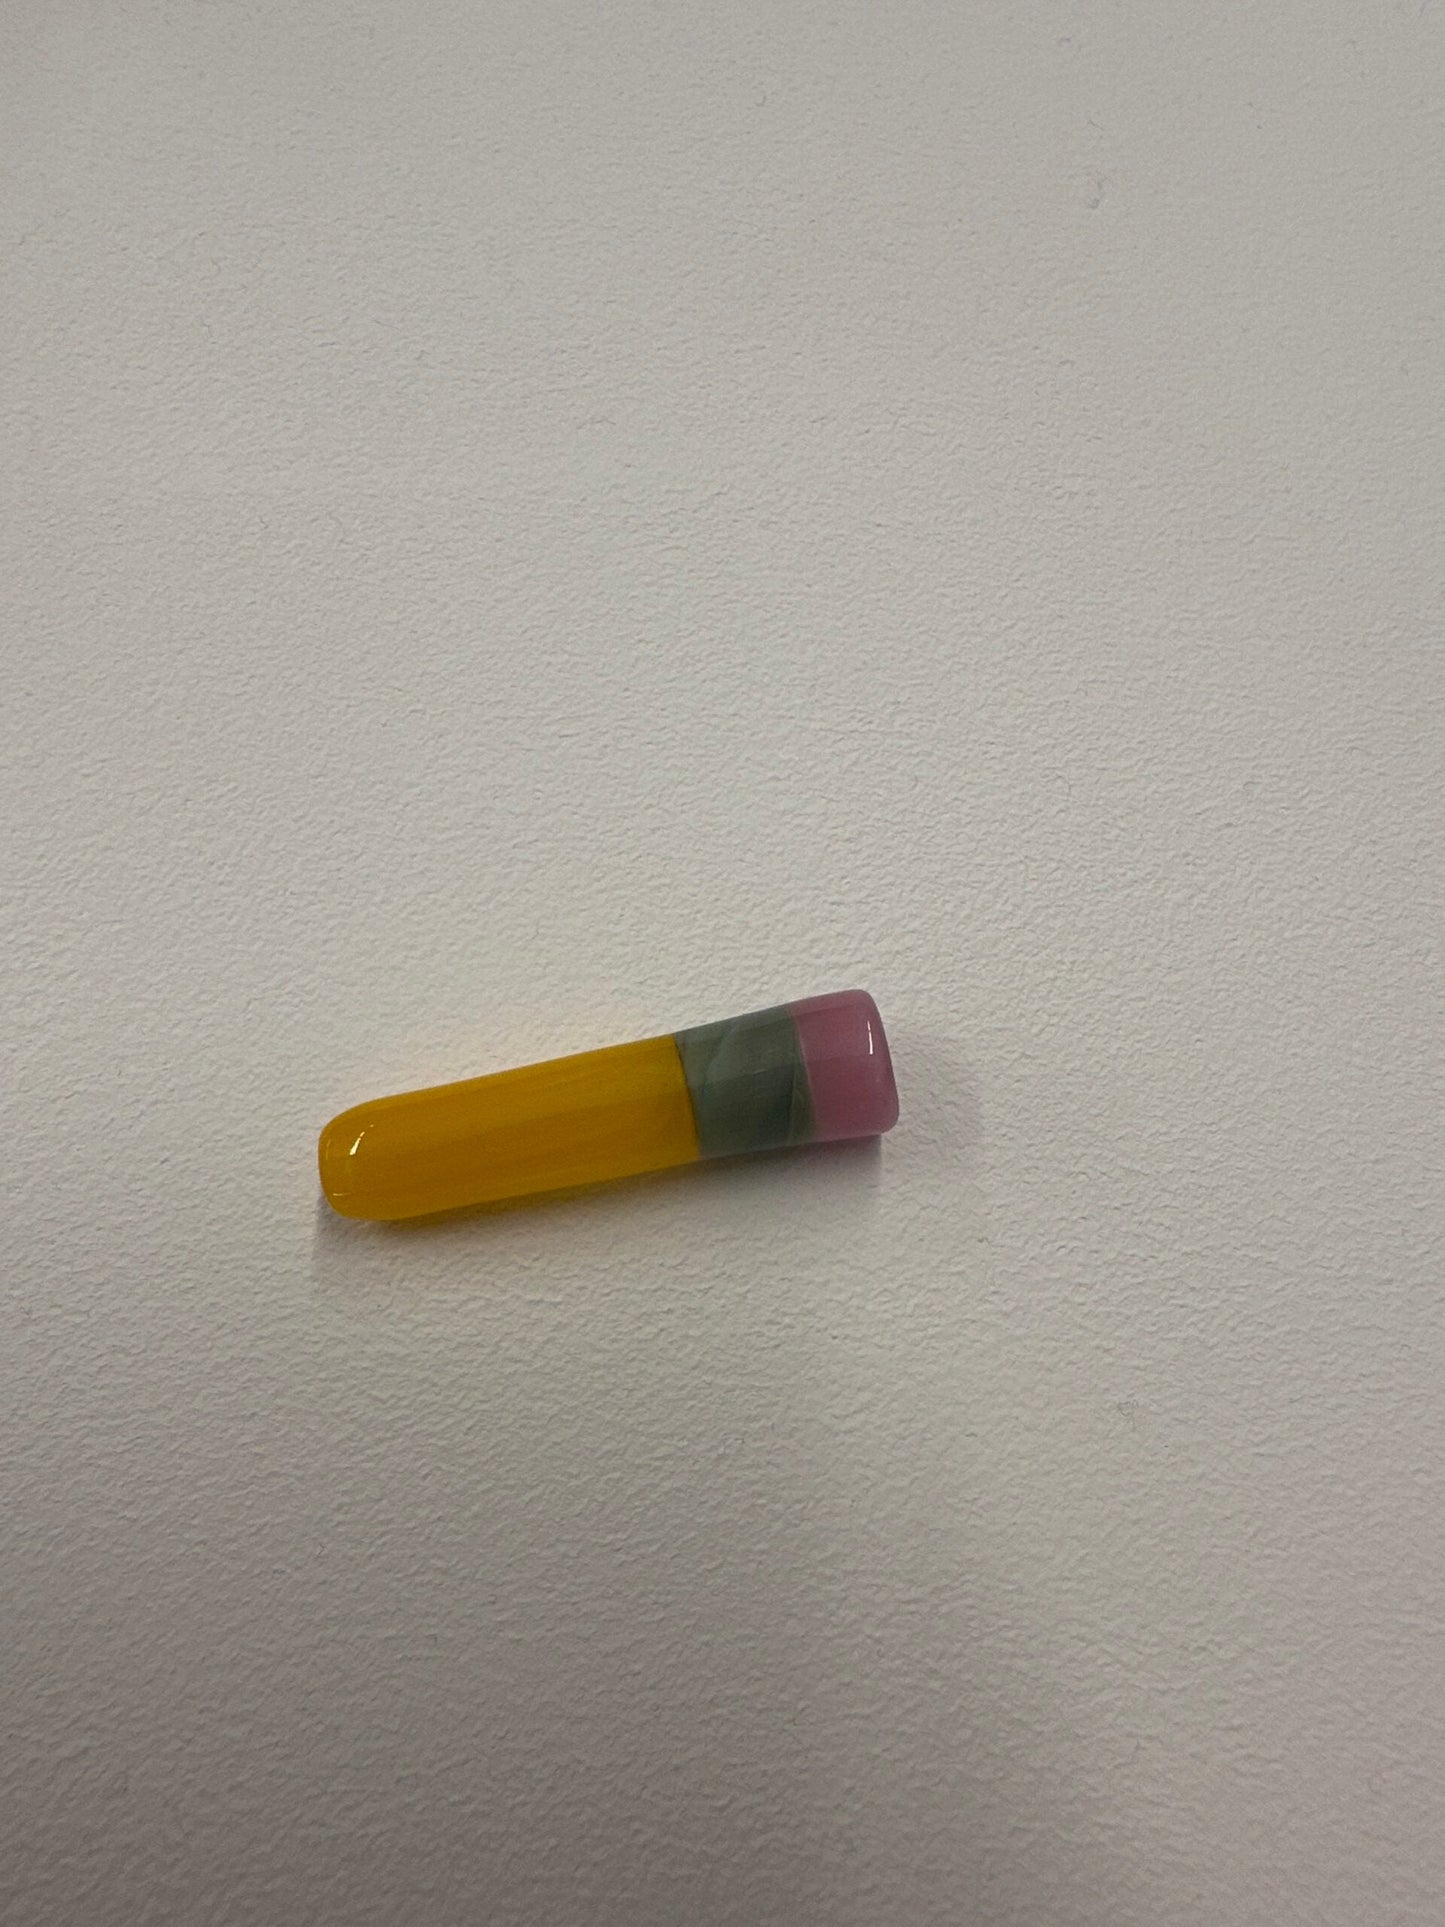 sophisticated art piece - Roach Eraser by Sherbet Glass